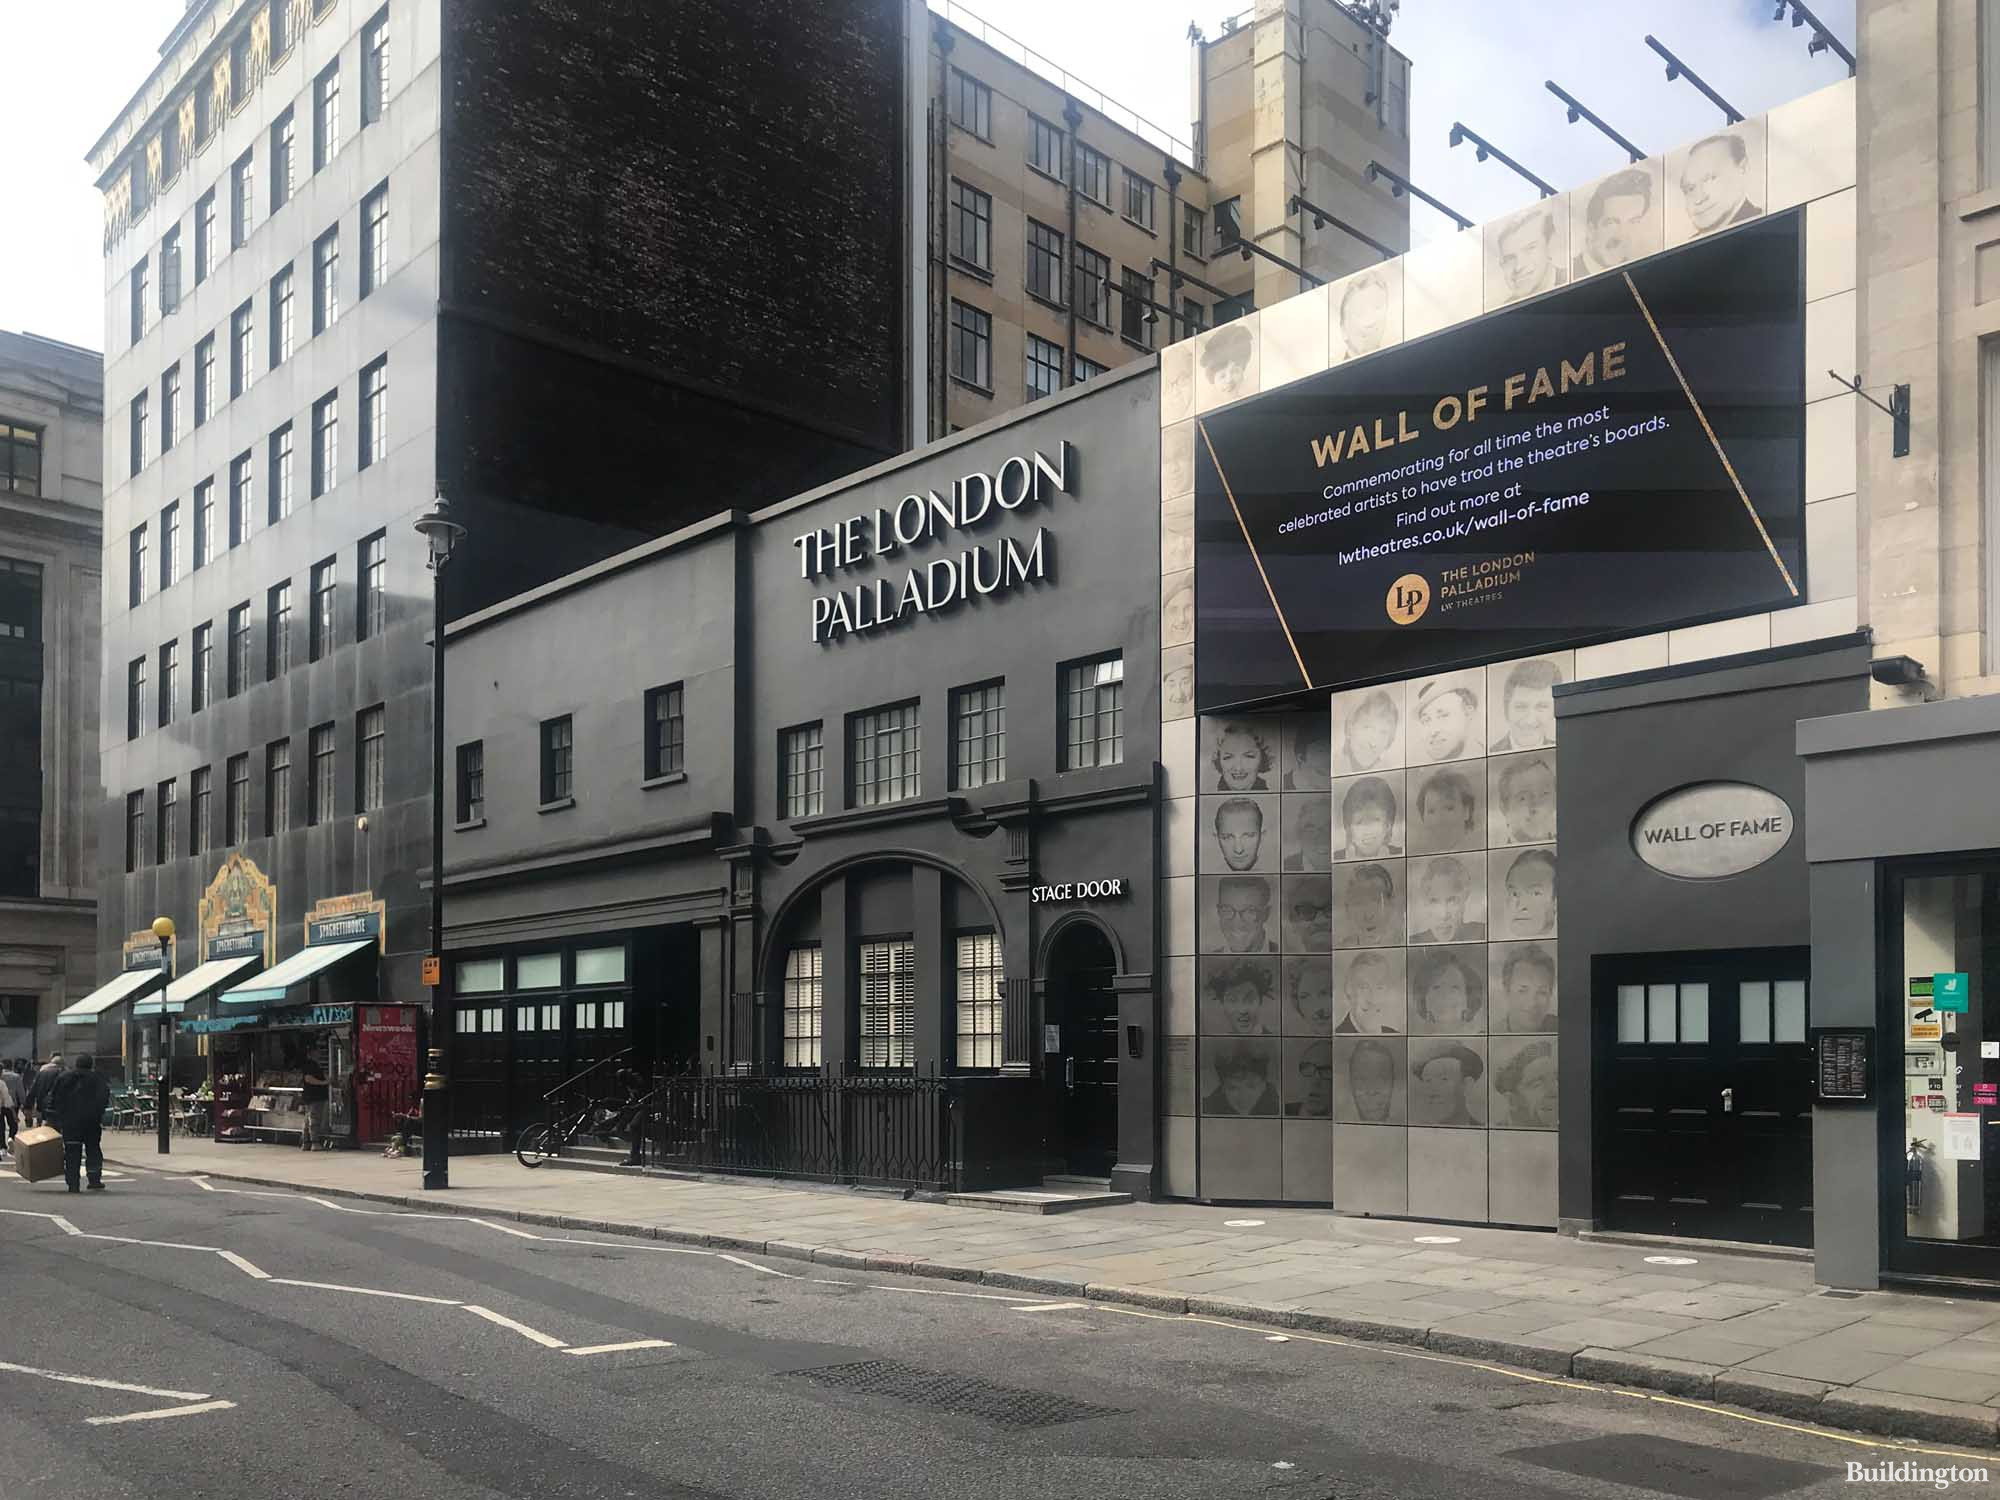 The London Palladium on Great Marlborough Street off Regent Street in Soho, London W1.